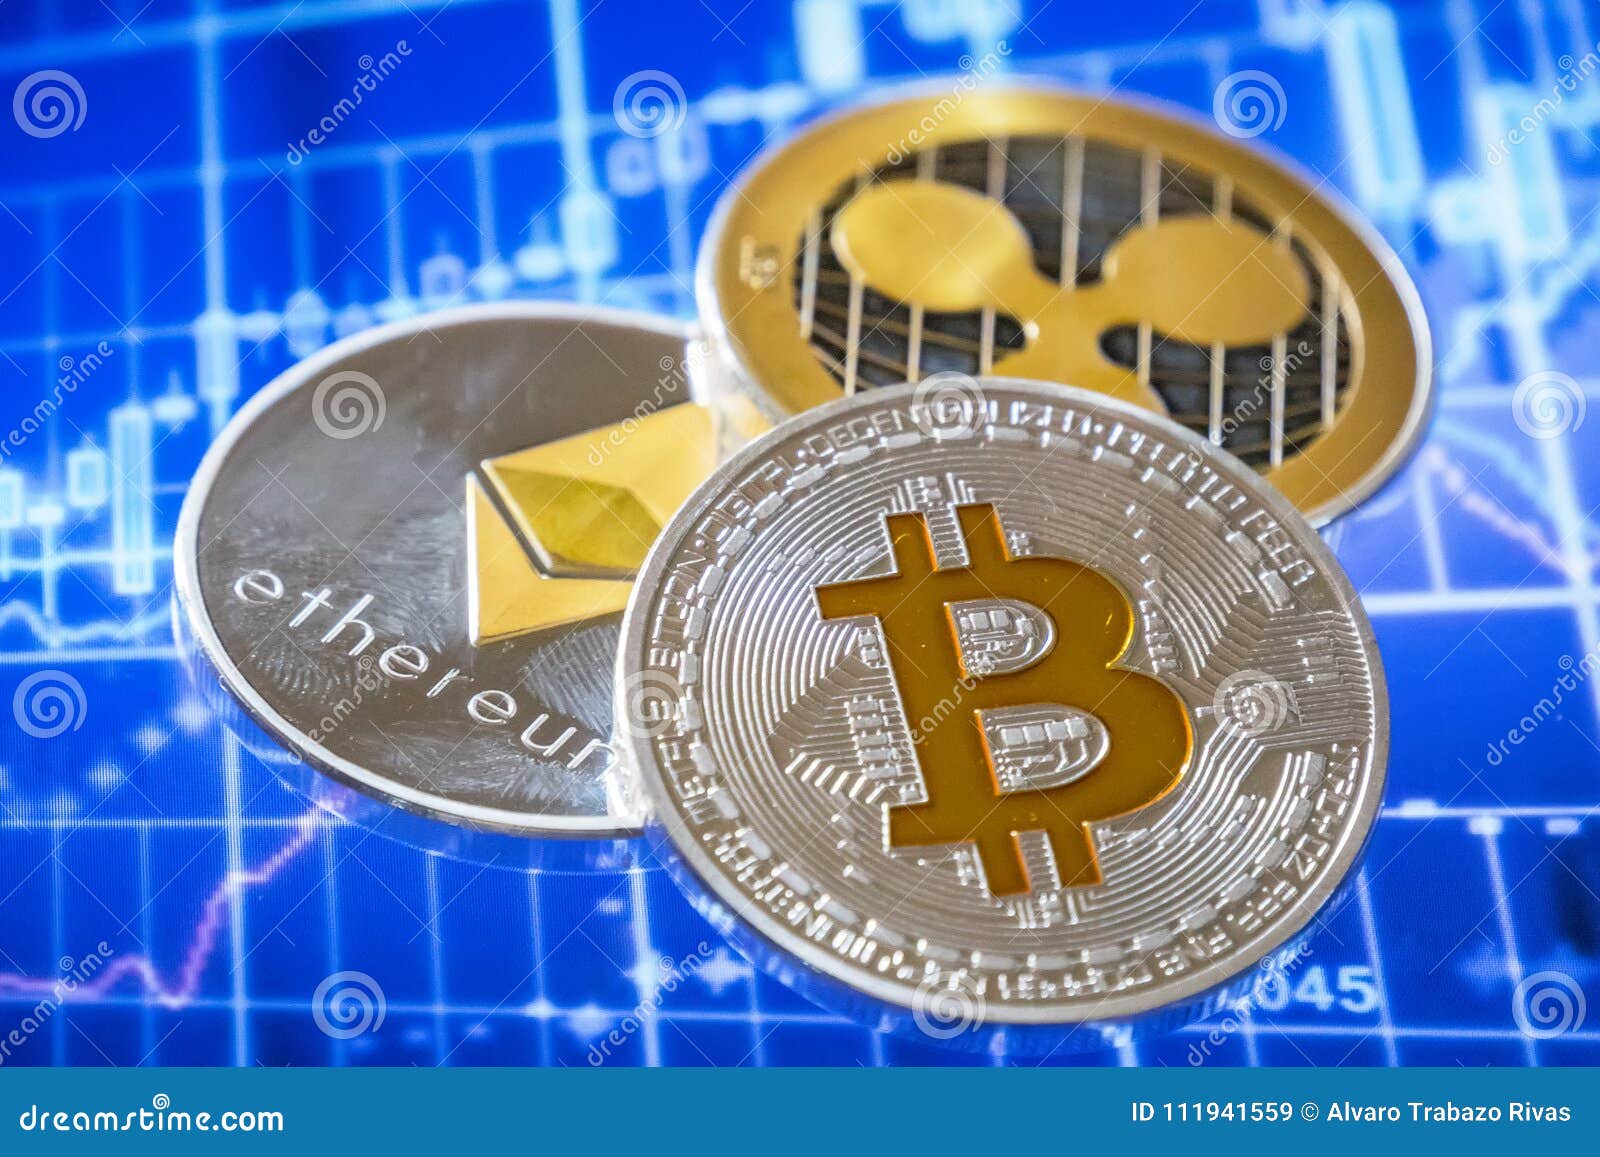 trading bitcoin la ripple)